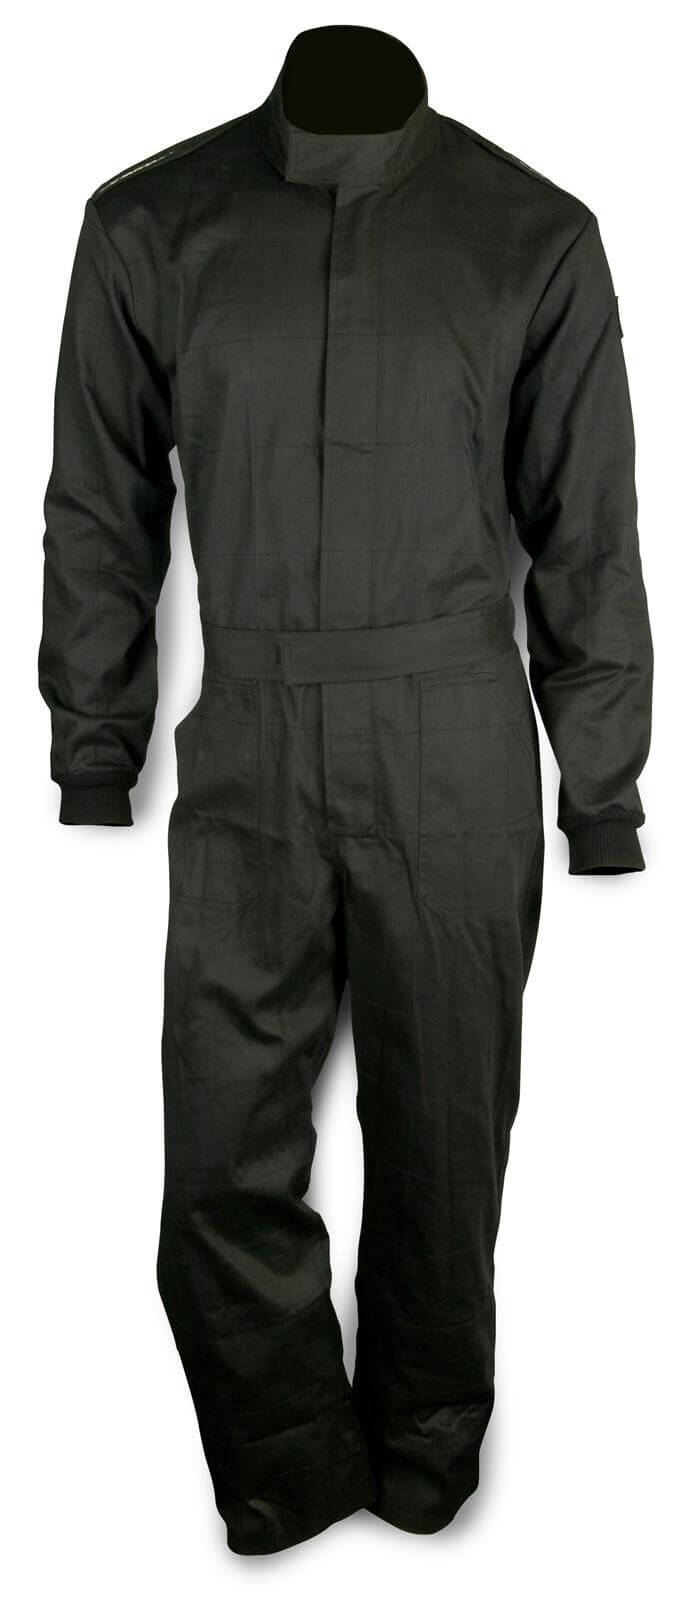 'Paddock' Racing Suit - $369.95